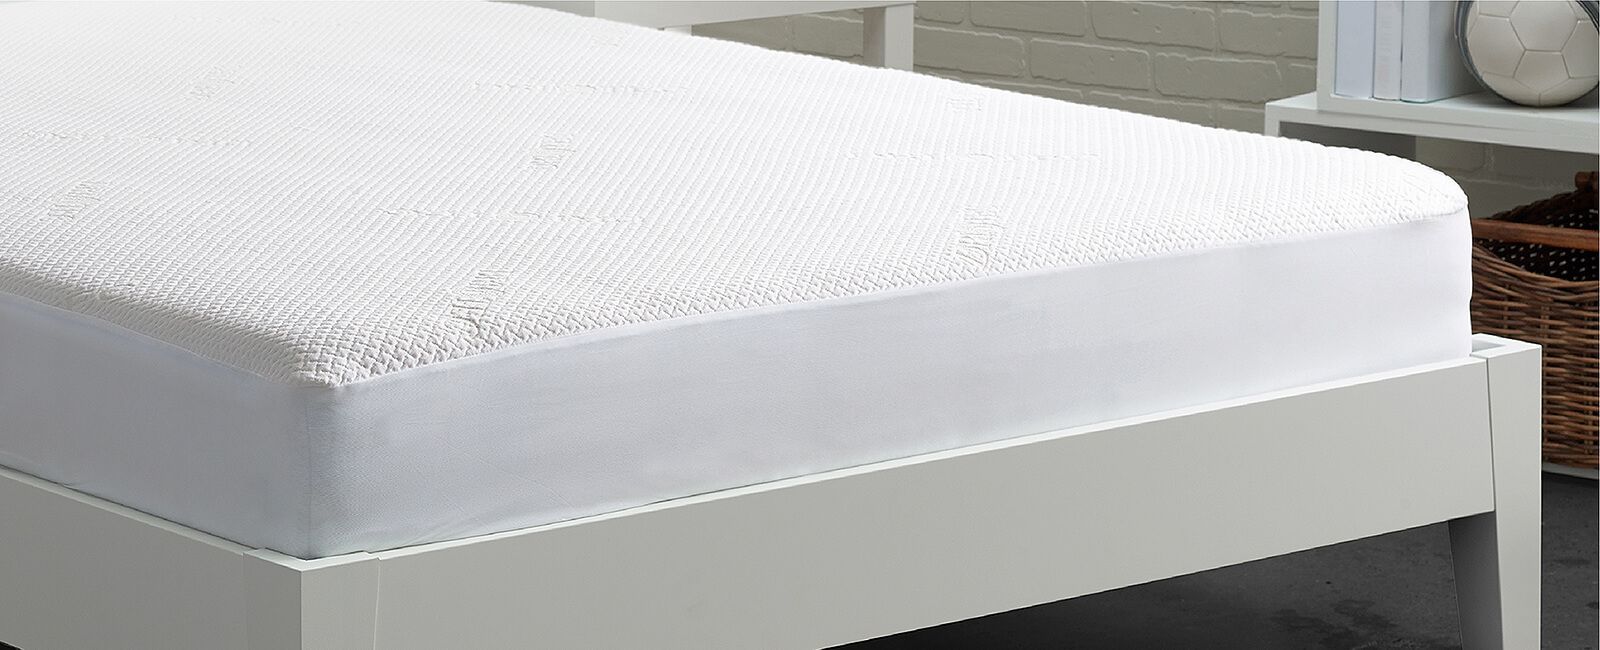 dri-tec mattress protector king size